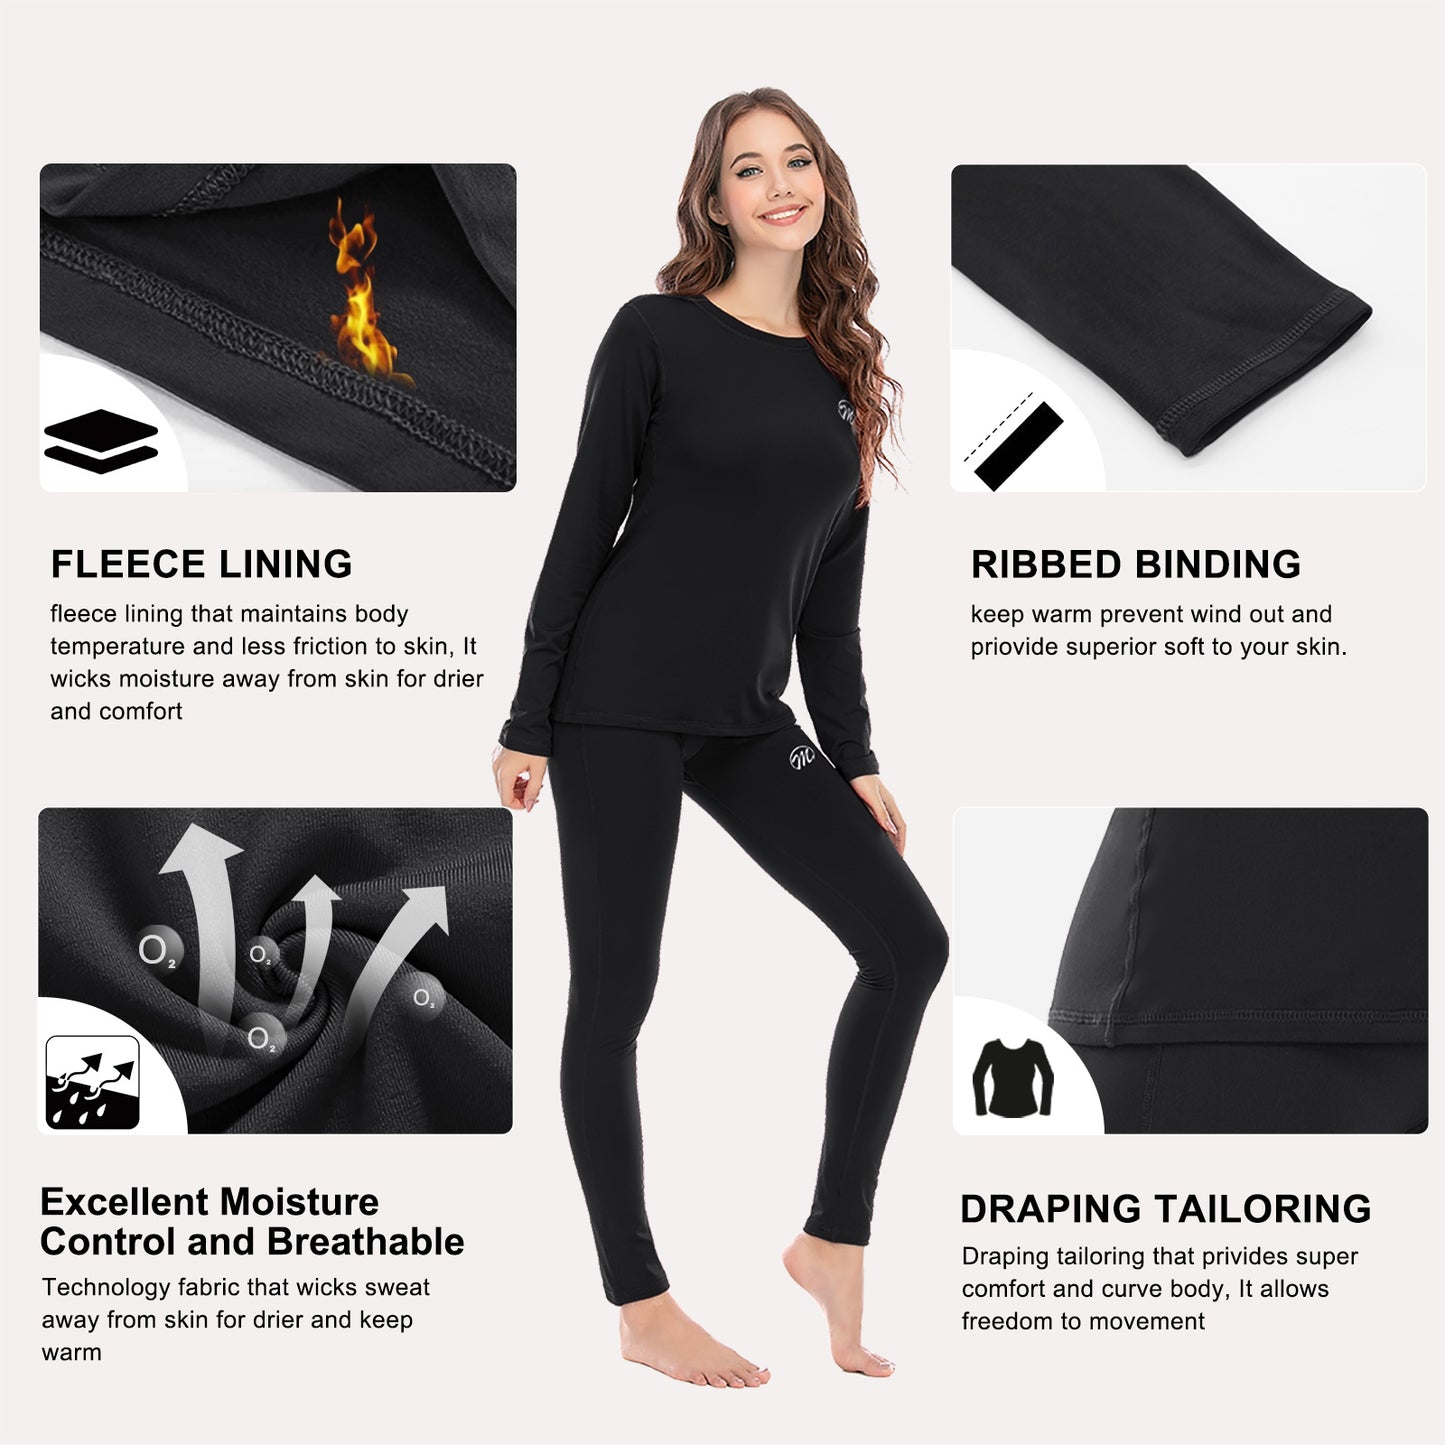 Thermal Underwear for Women Winter Base Layer Warm Top & Bottom Set